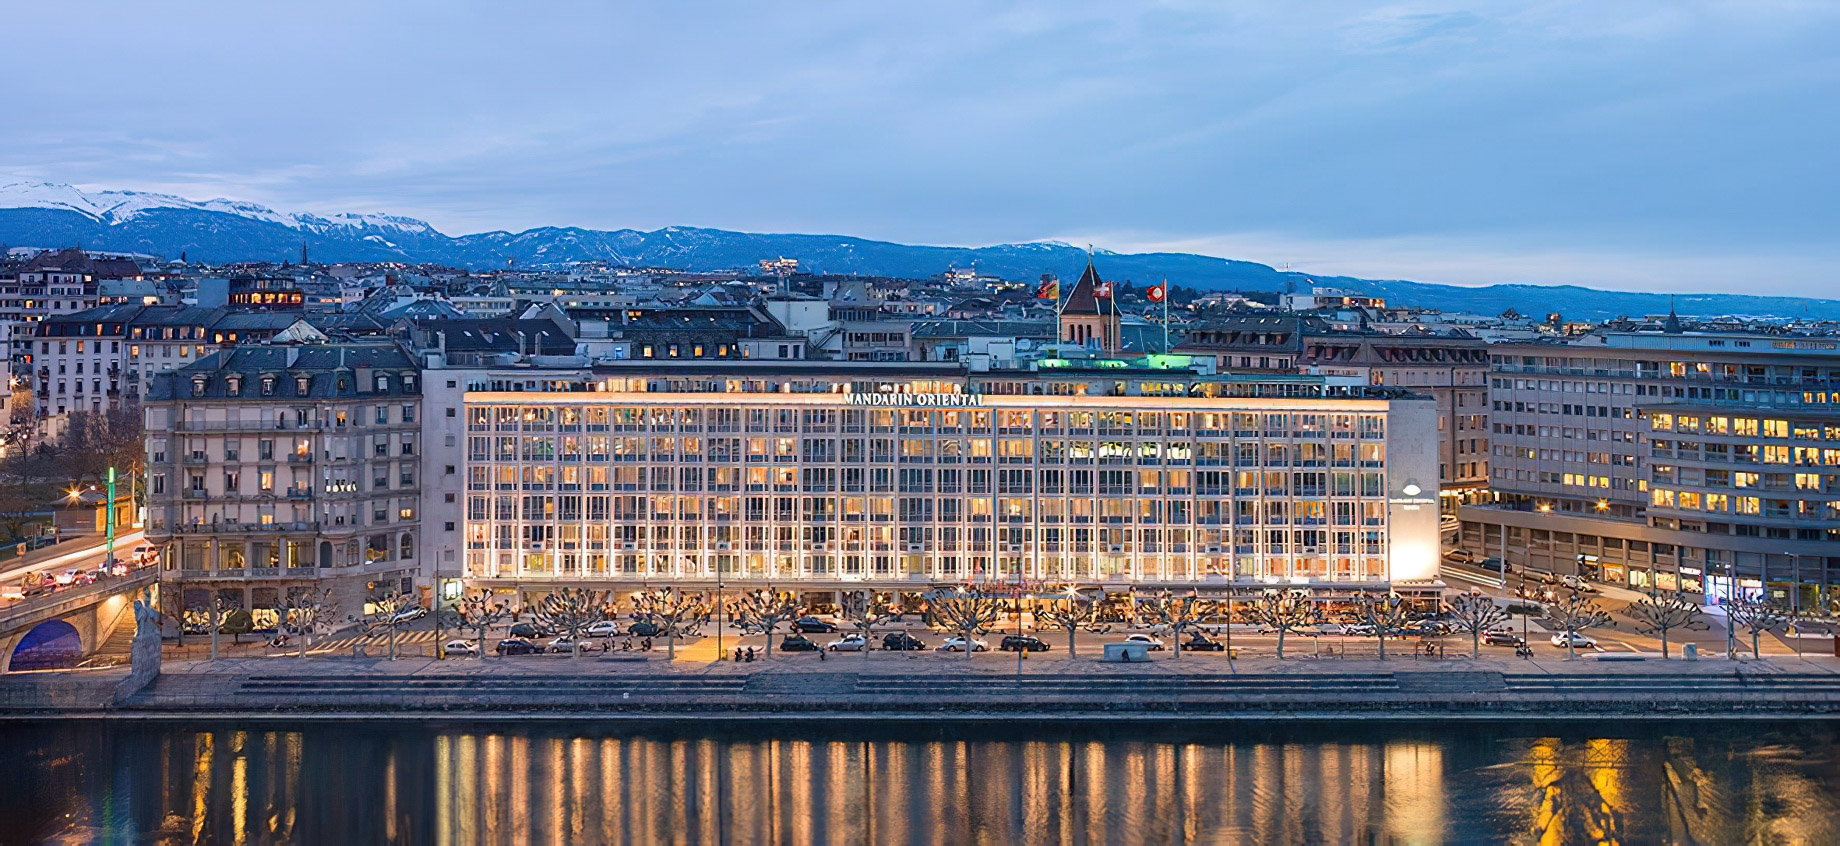 Mandarin Oriental, Geneva Hotel – Geneva, Switzerland – Hotel Riverfront Aerial View